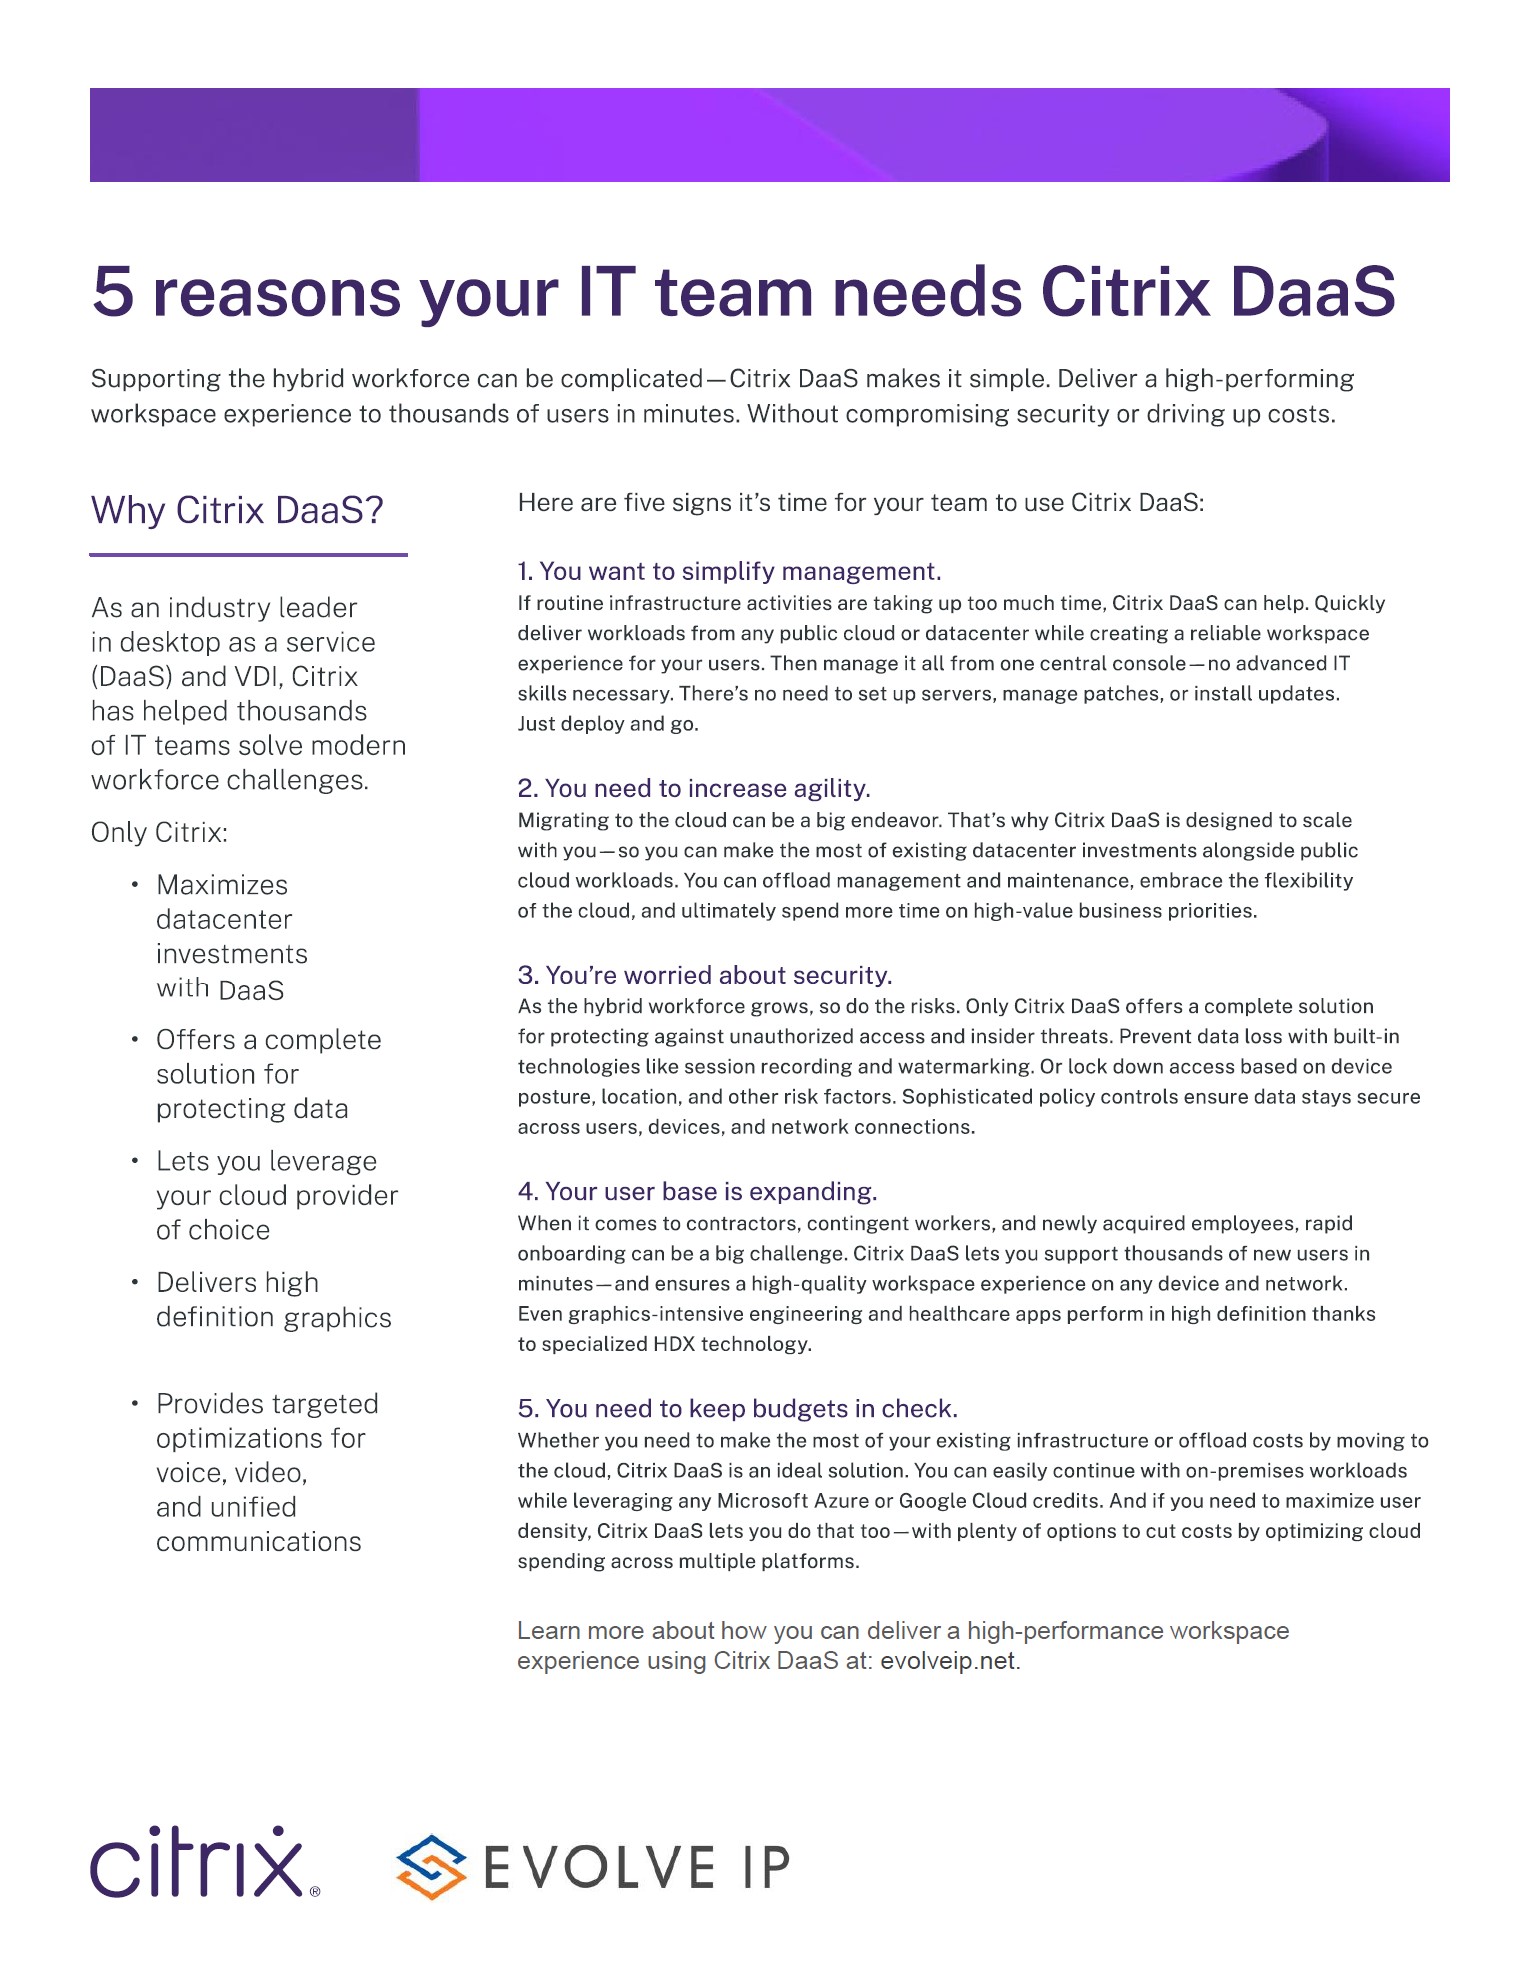 5 Reasons Citrix DaaS